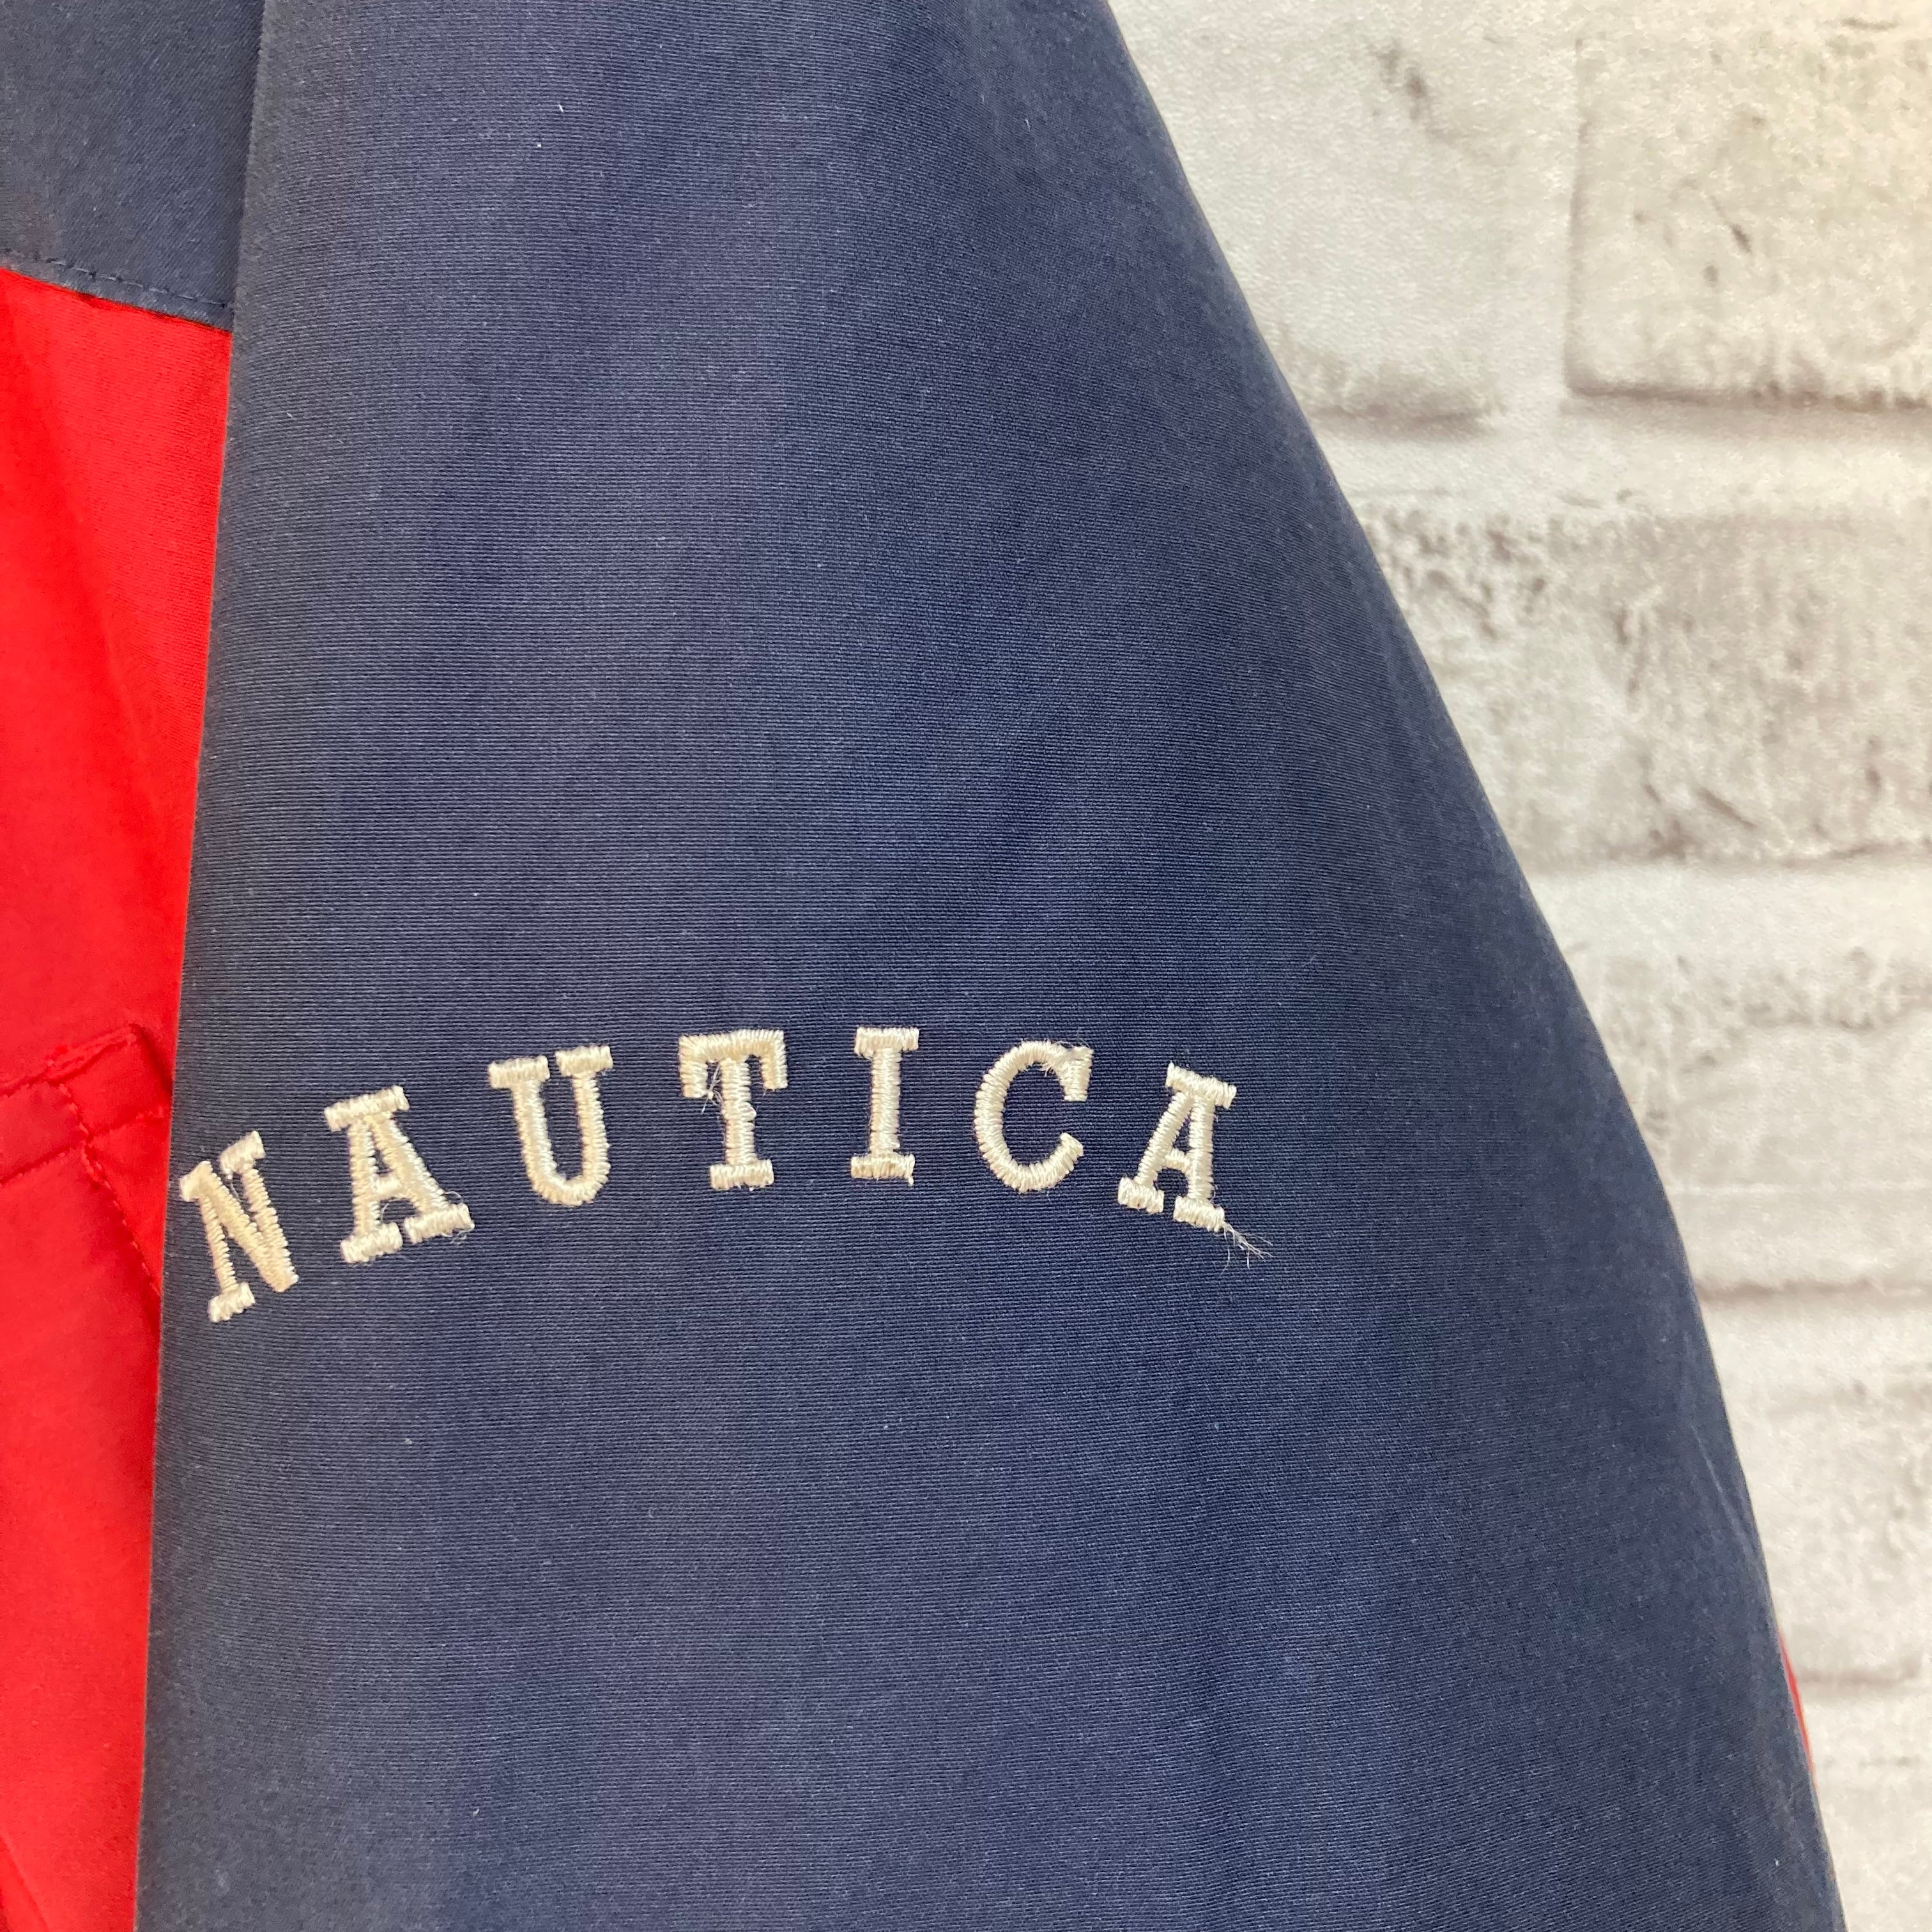 nautica】Heavy Nylon Jacket L 90s “Old nautica”ノーティカ ナイロン 